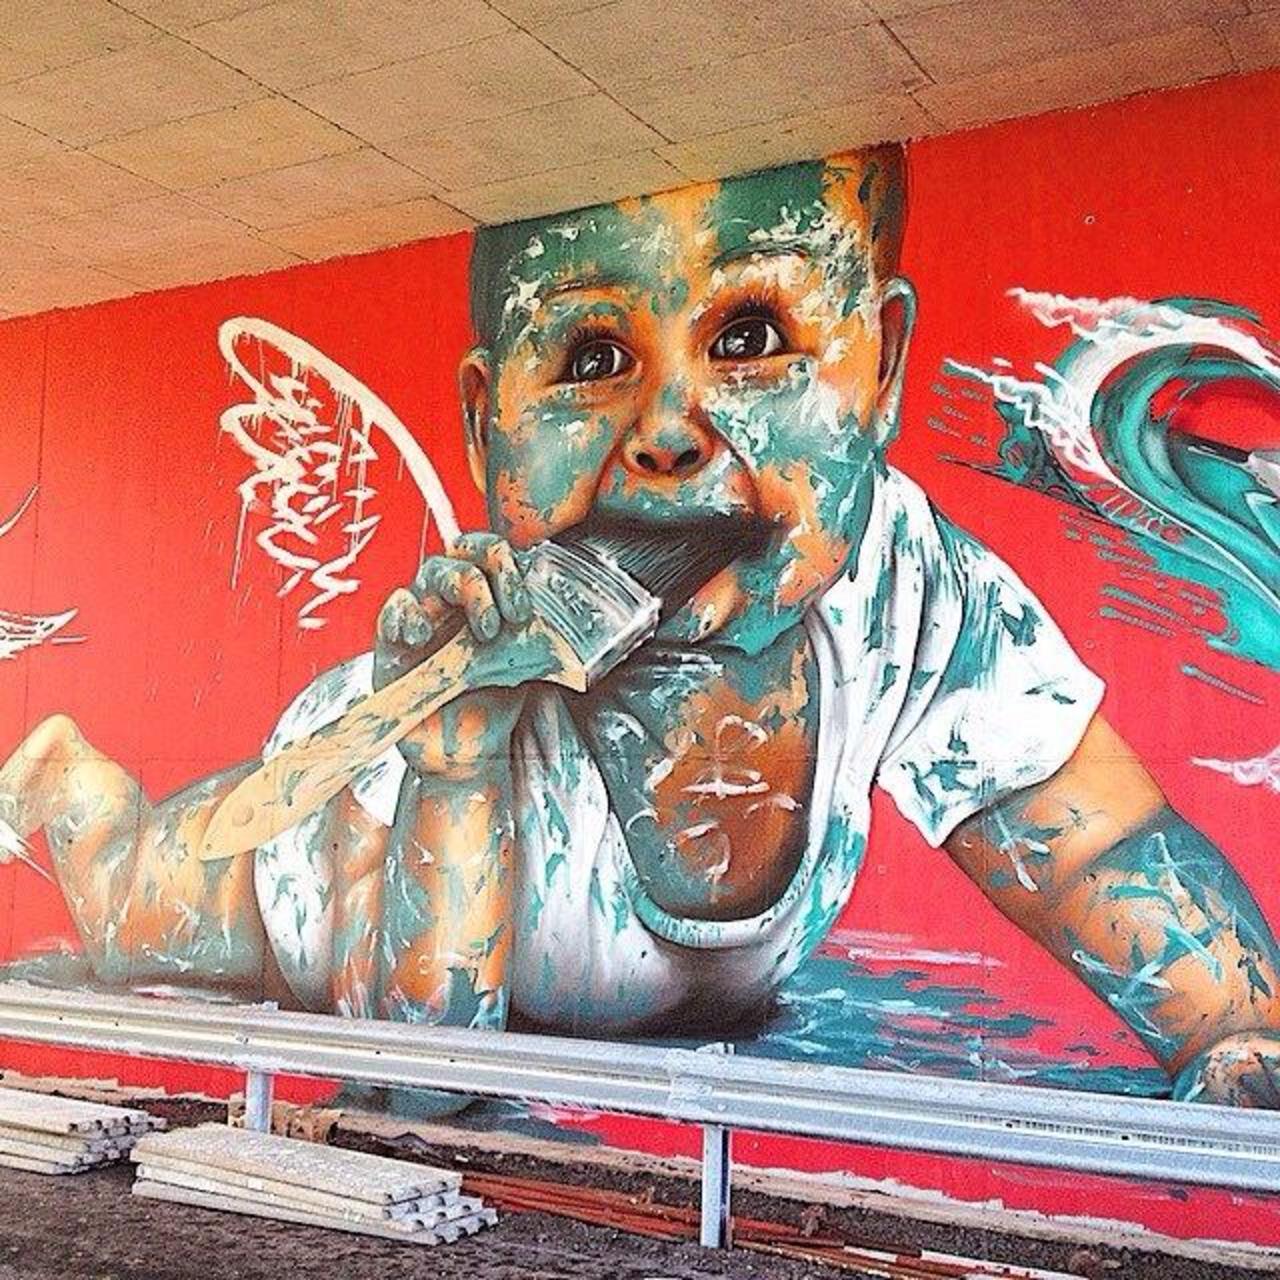 Endearing new Street Art by Cheone 

#art #arte #graffiti #streetart http://t.co/HB0YPEpwoT